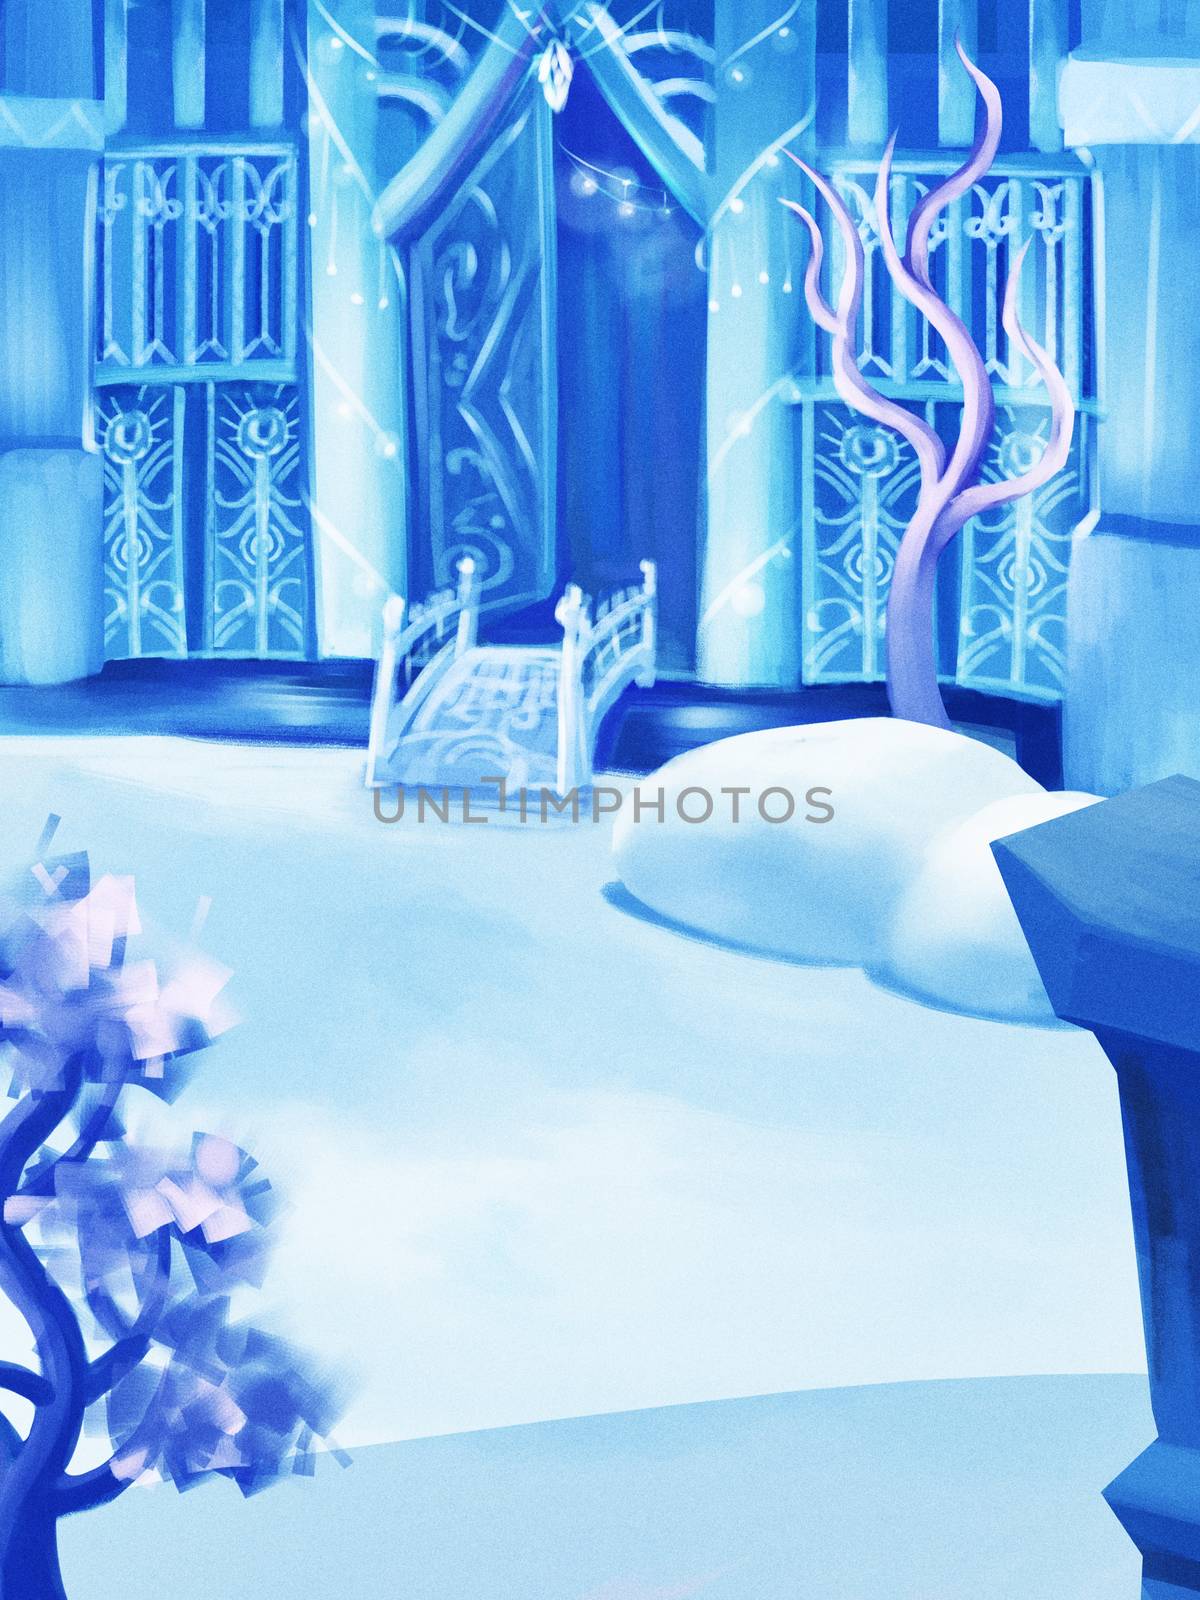 Illustration: The Back Yard of Snow Palace. Fantastic Cartoon Style Scene Wallpaper Background Design.